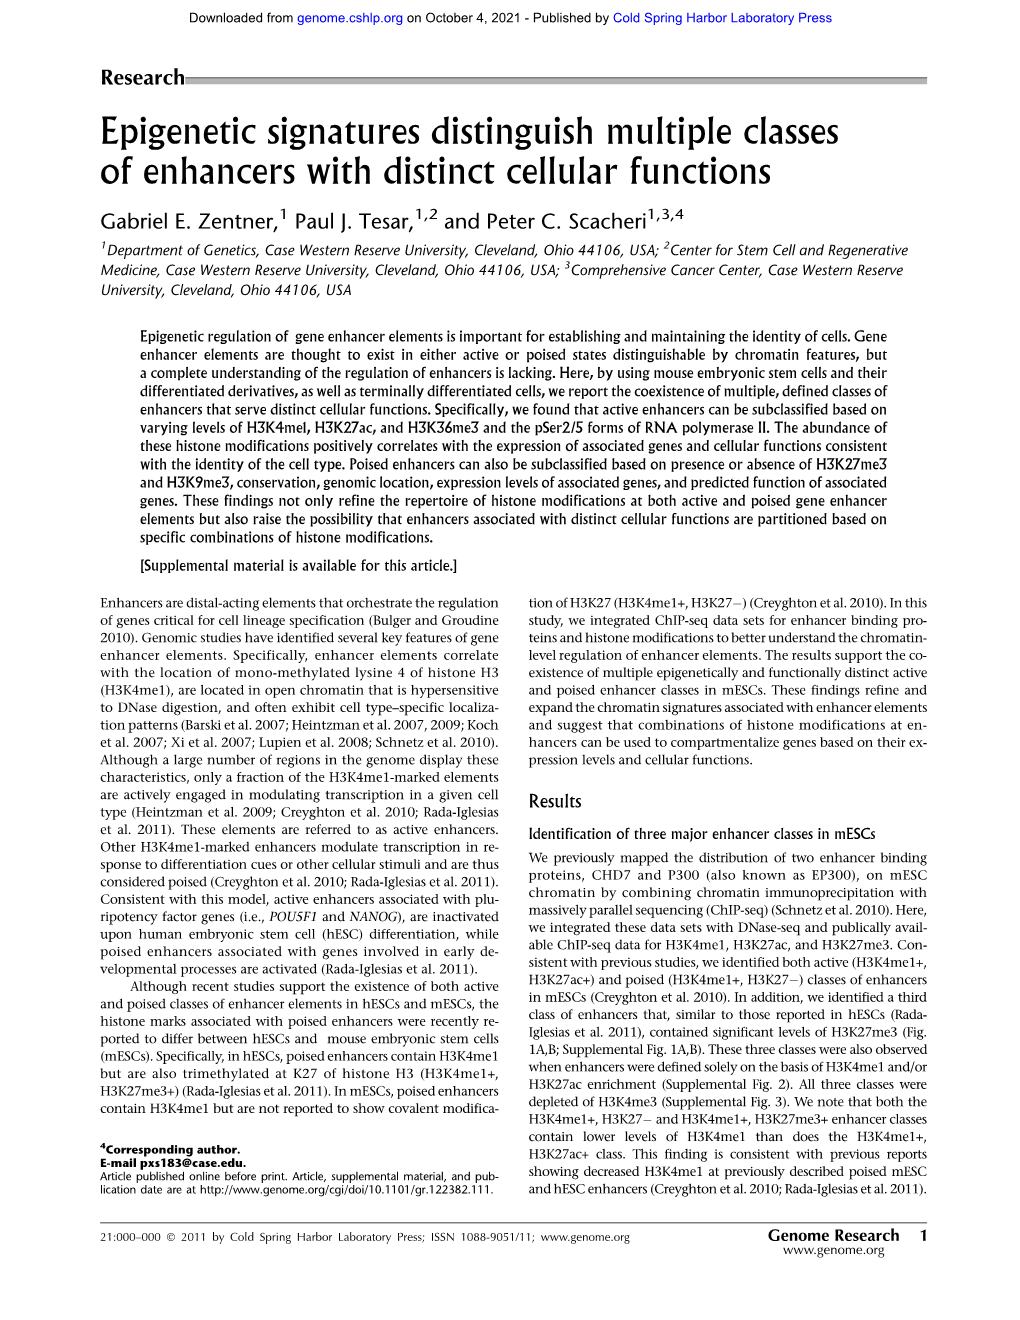 Epigenetic Signatures Distinguish Multiple Classes of Enhancers with Distinct Cellular Functions